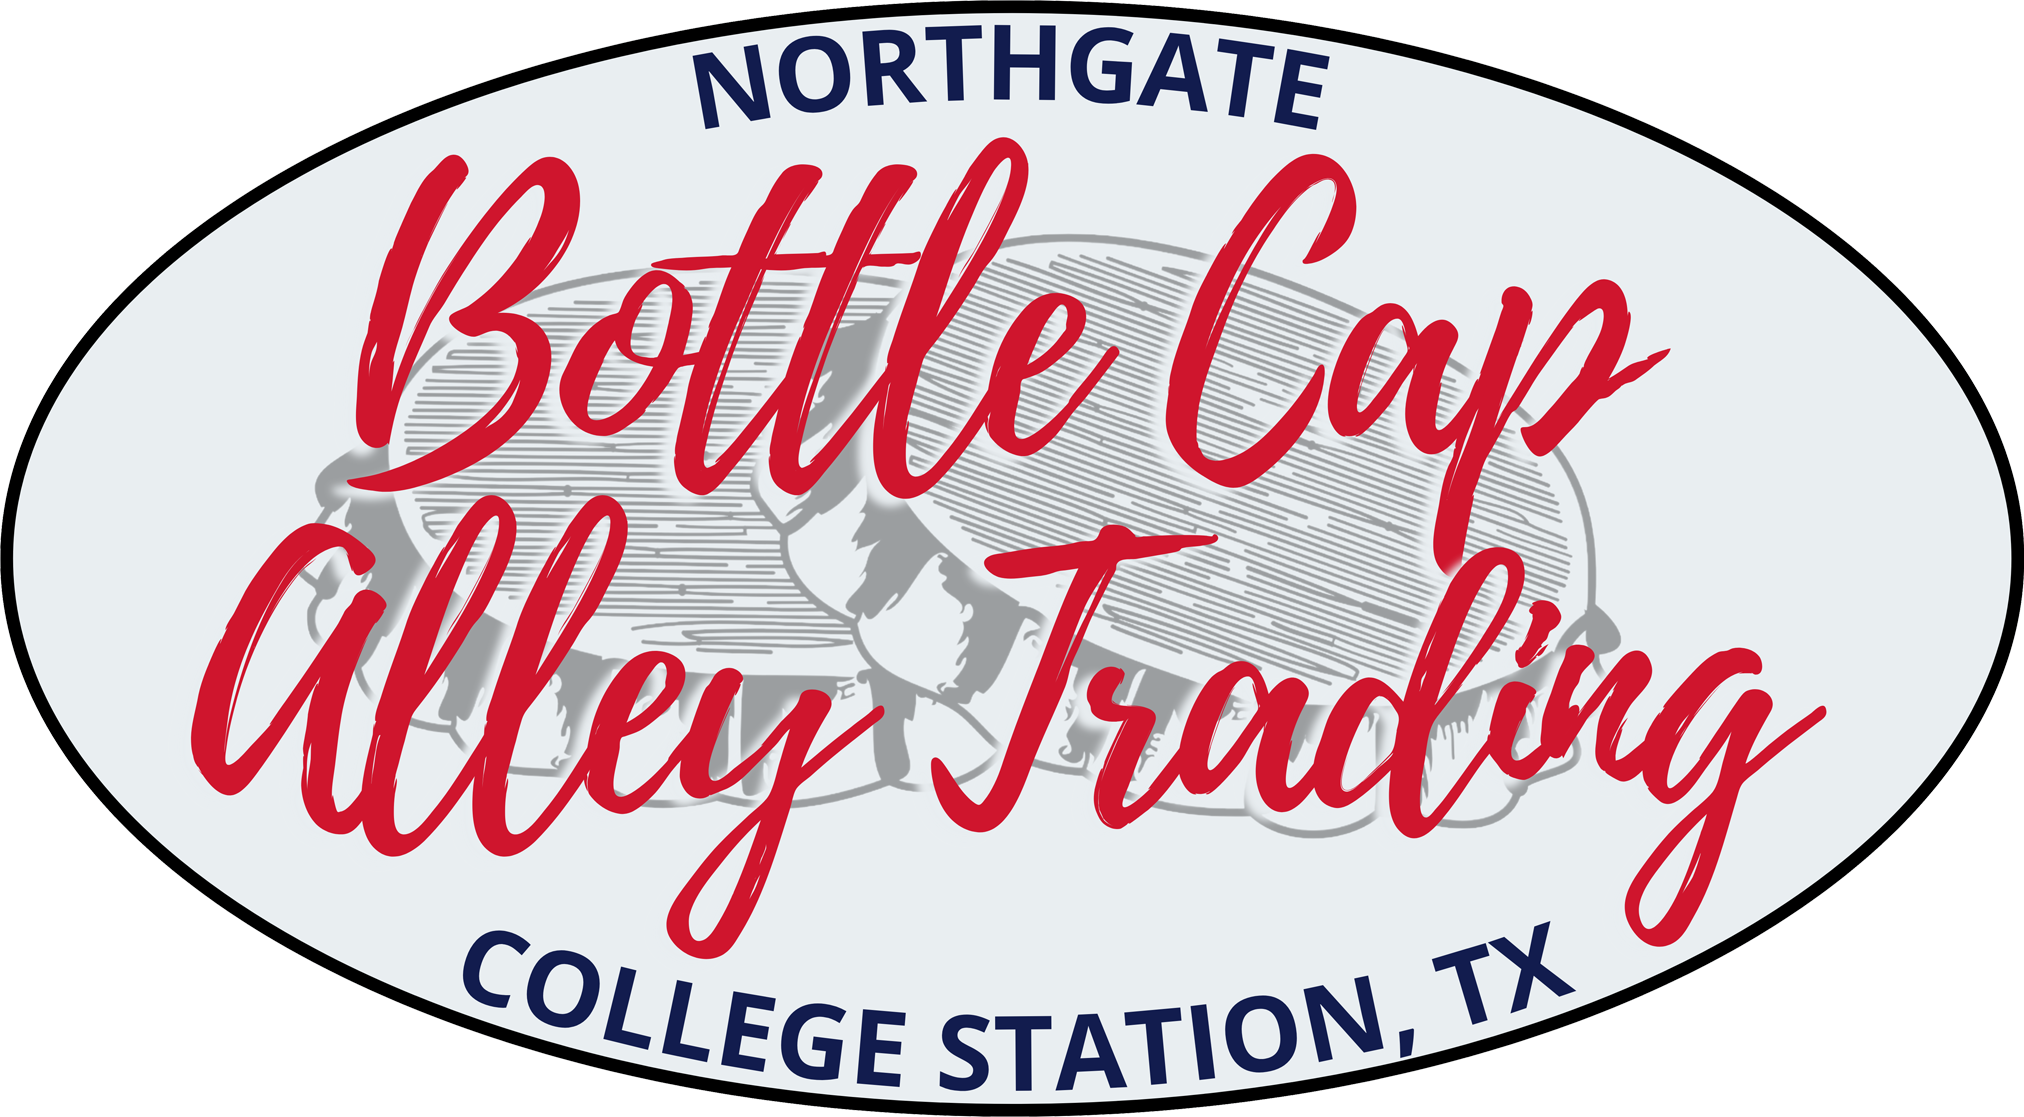 Bottle Cap Alley Trading